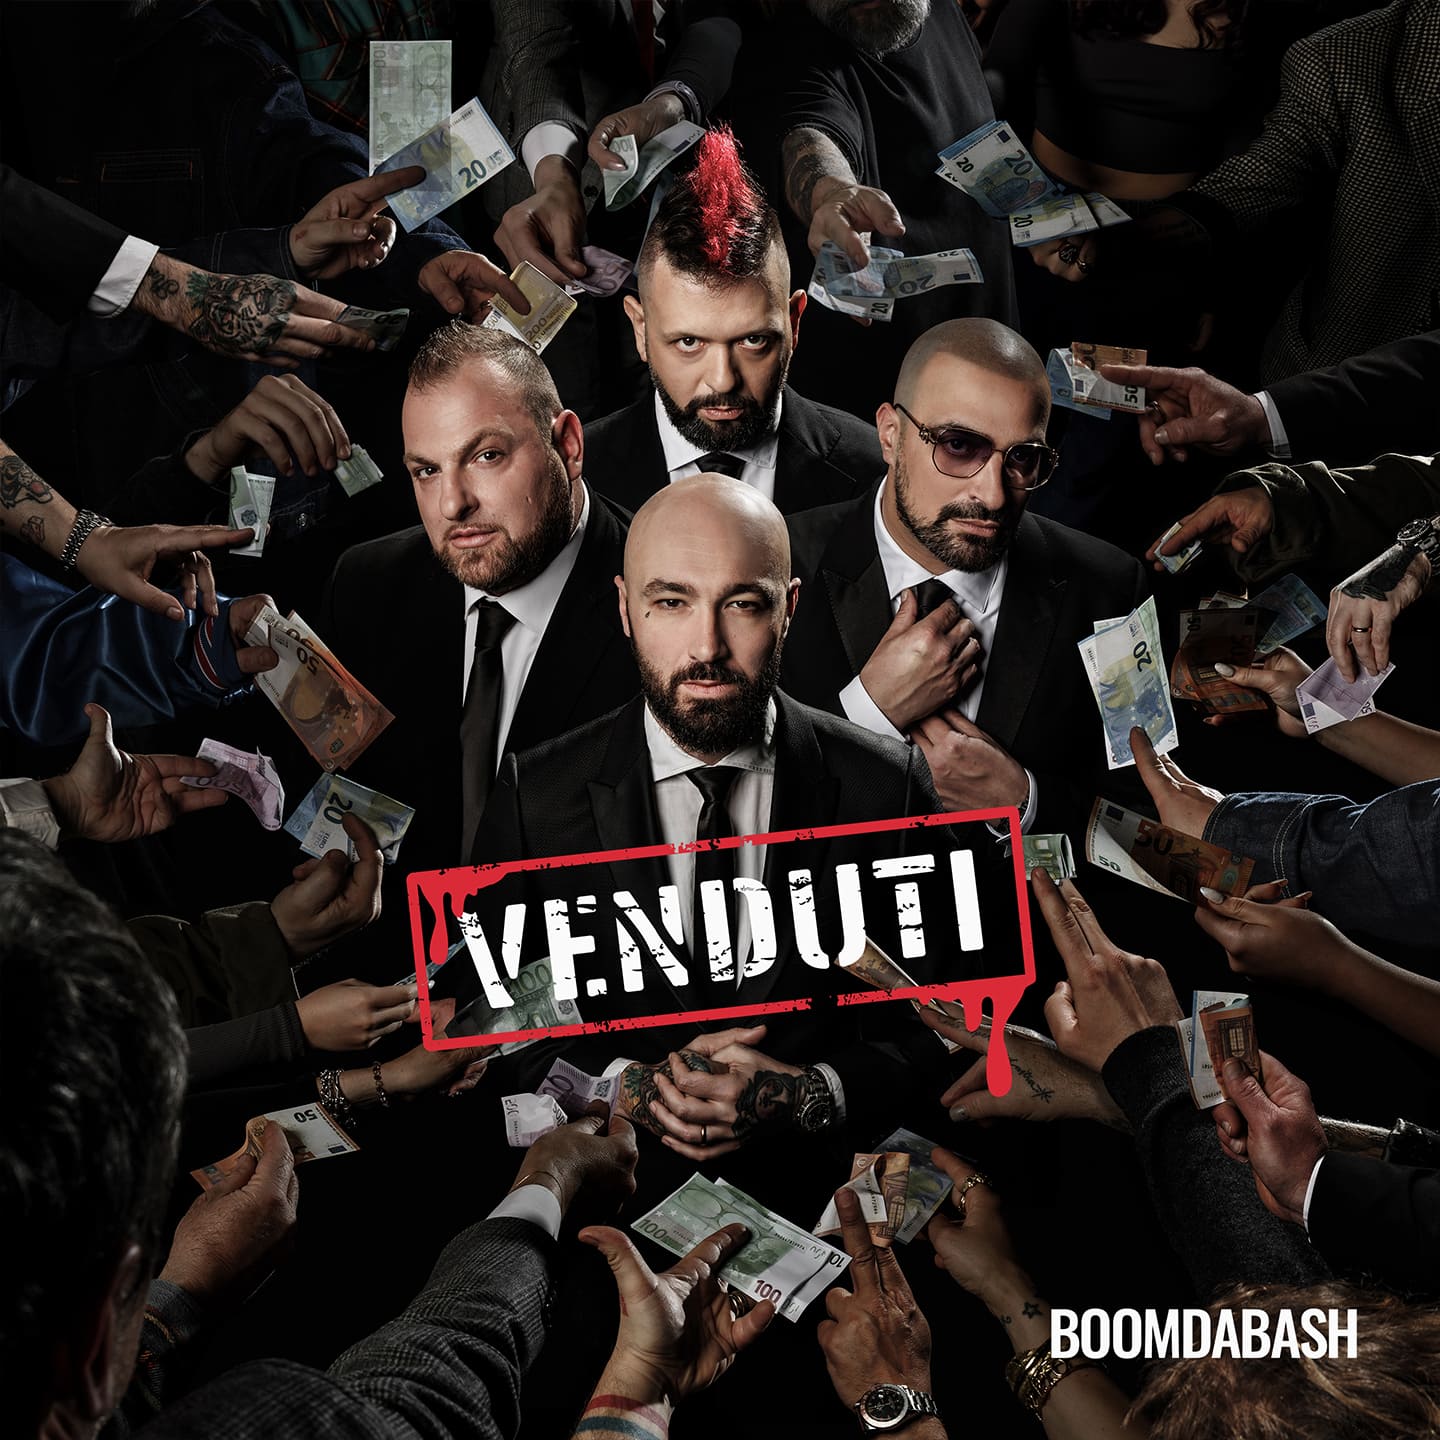 boomdabash "venduti" artwork cover